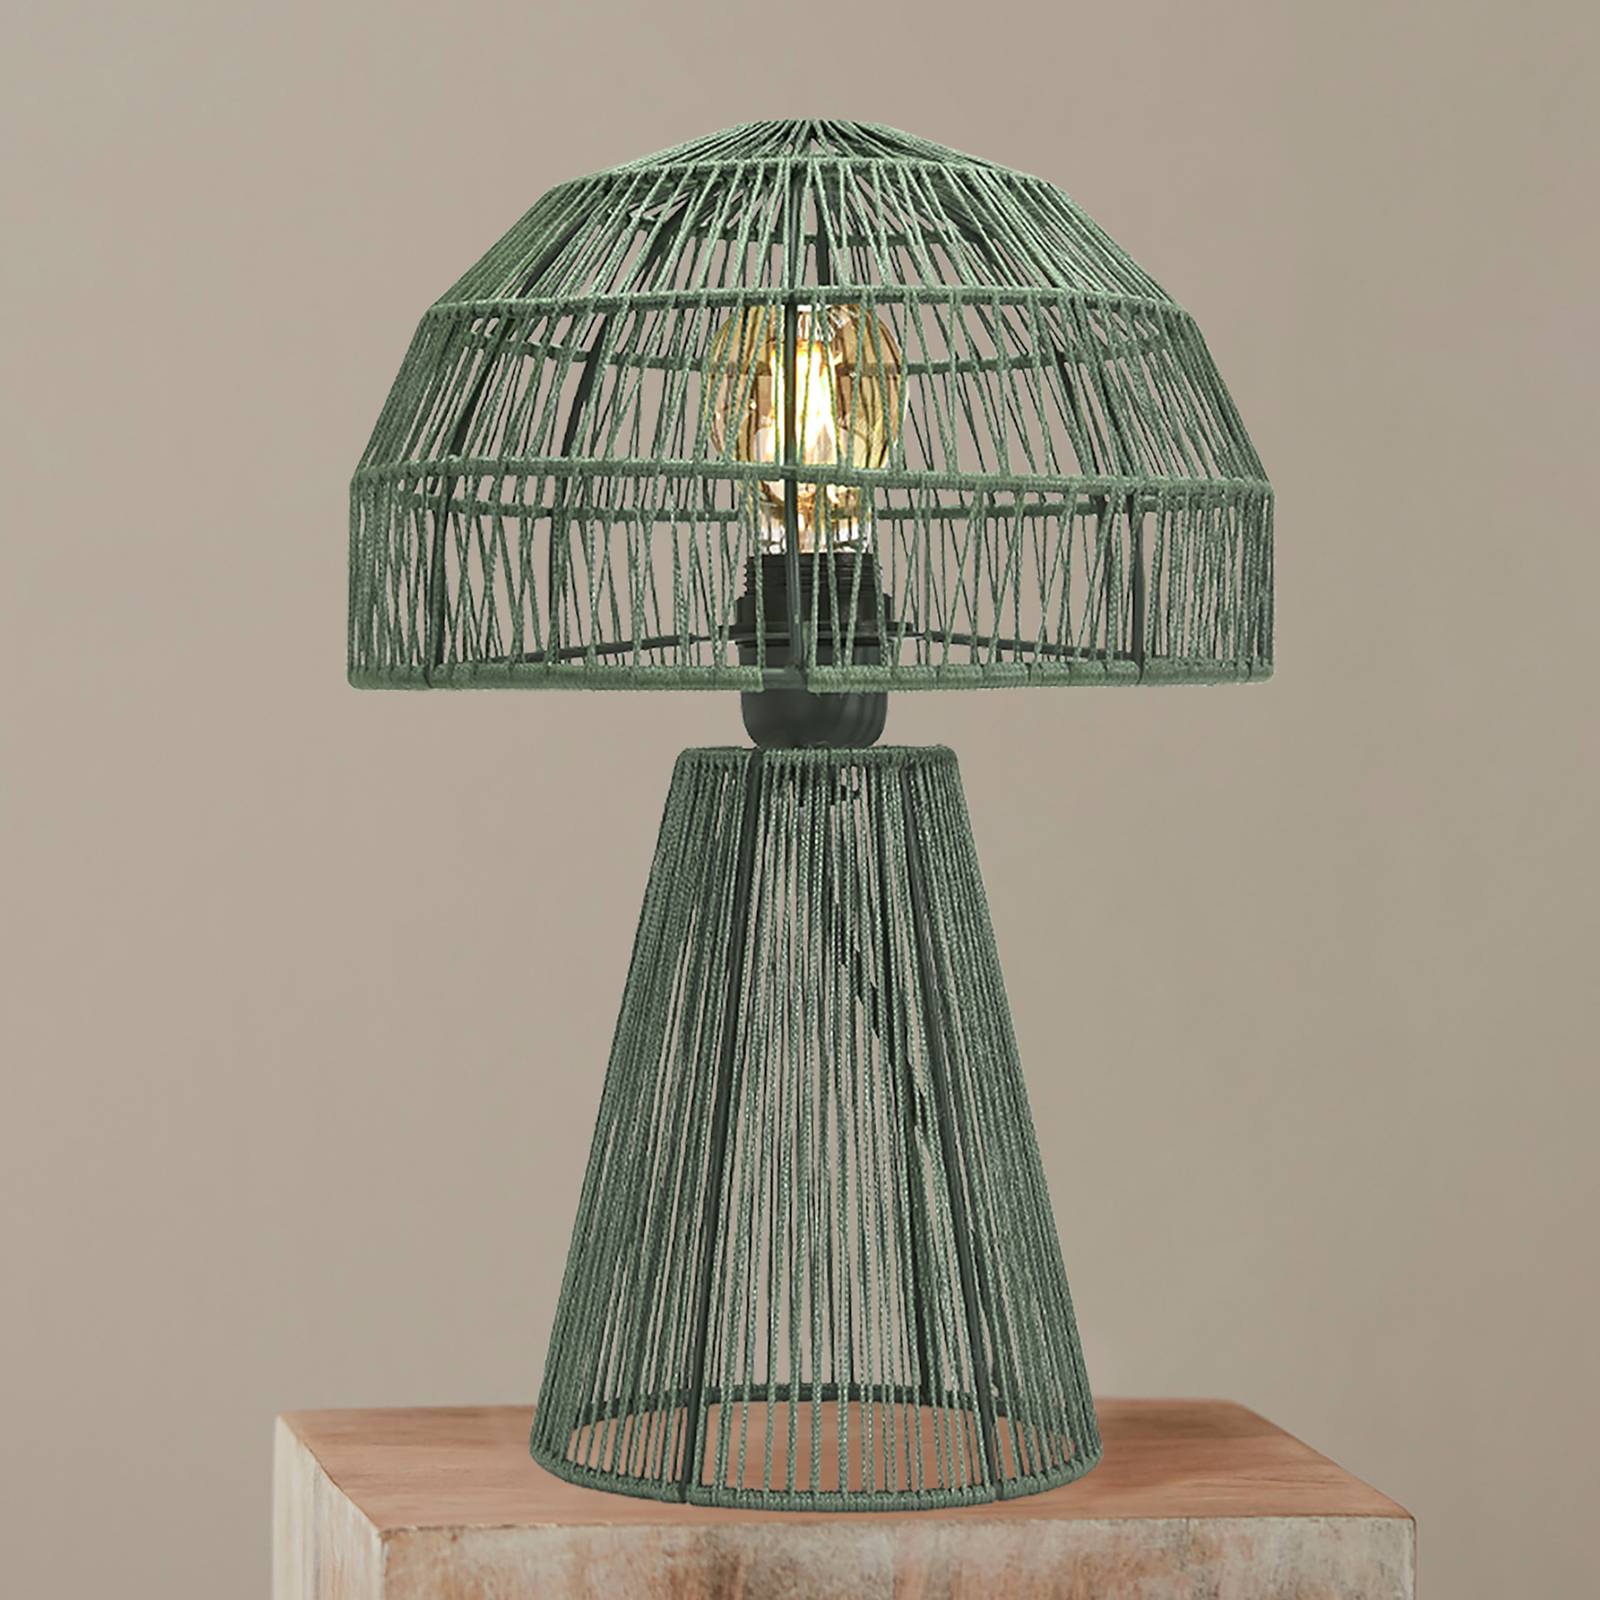 Image of PR Home Porcini lampe hauteur 37 cm vert sauge 7330976131303